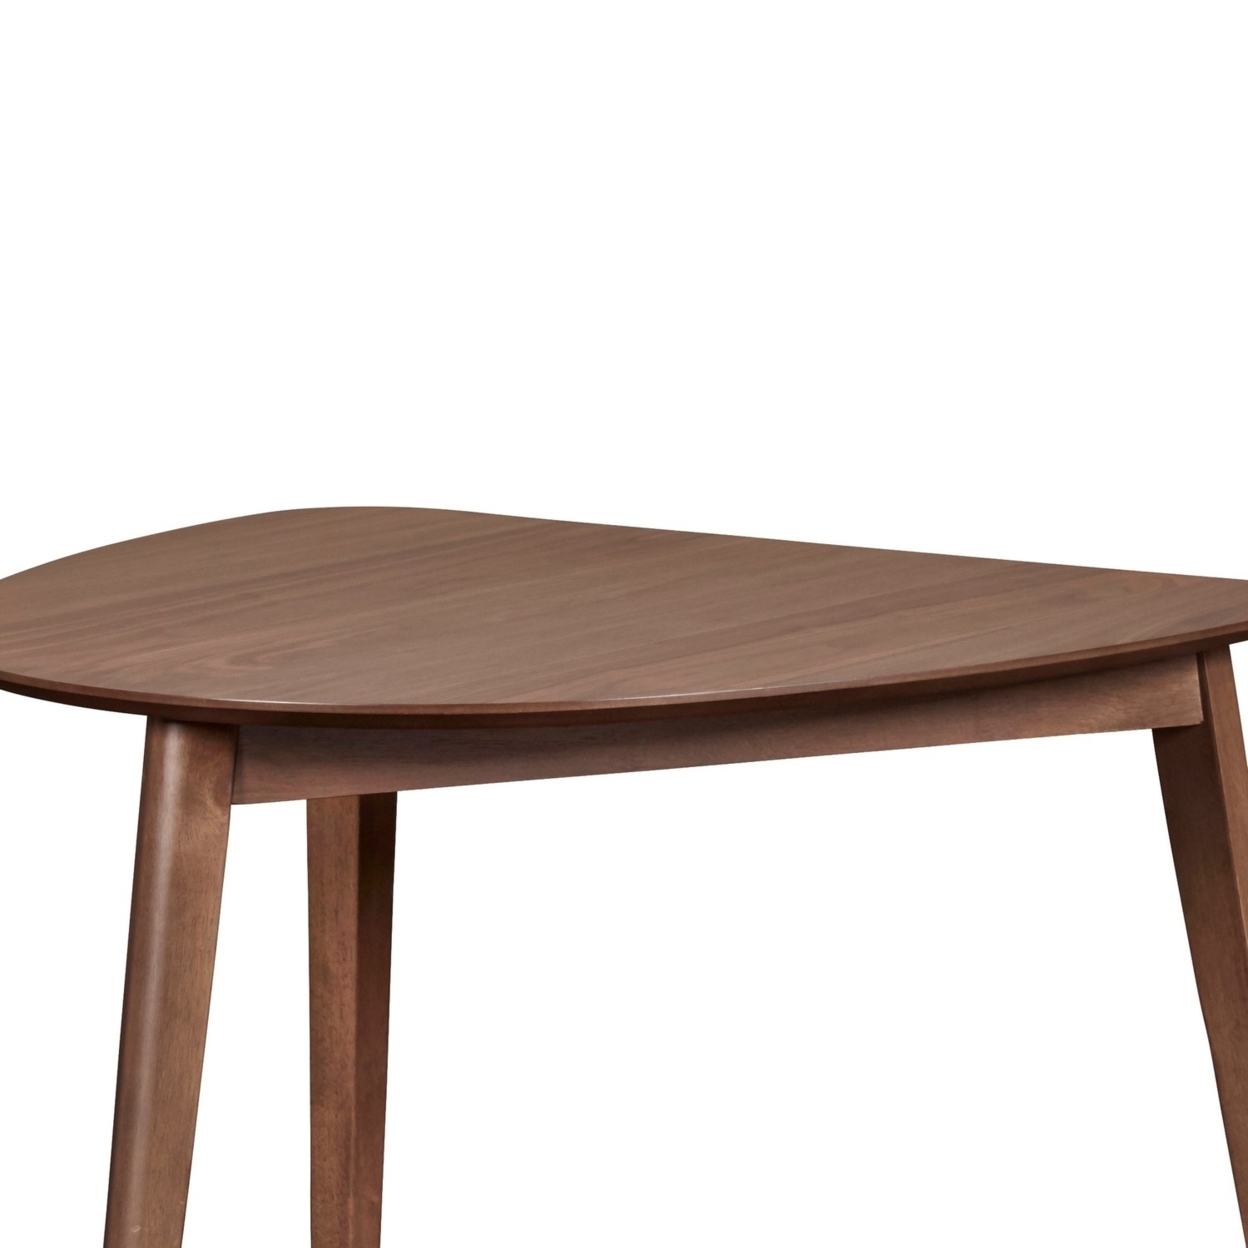 Mid Century Triangular Corner Table With Grain Details, Walnut Brown- Saltoro Sherpi